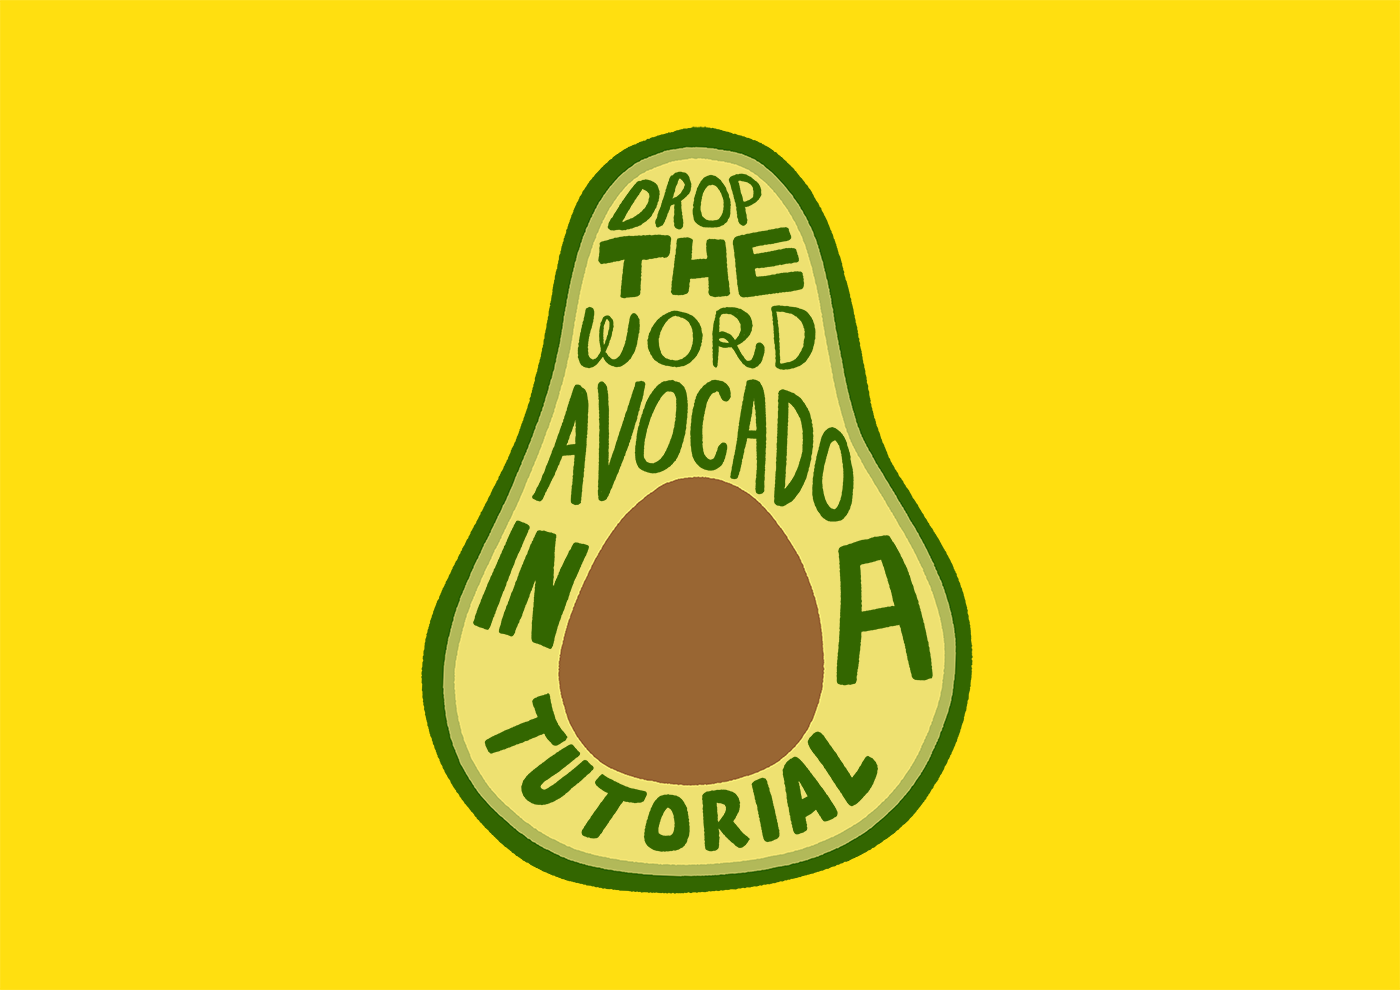 Drop the world avocado in a tutorial